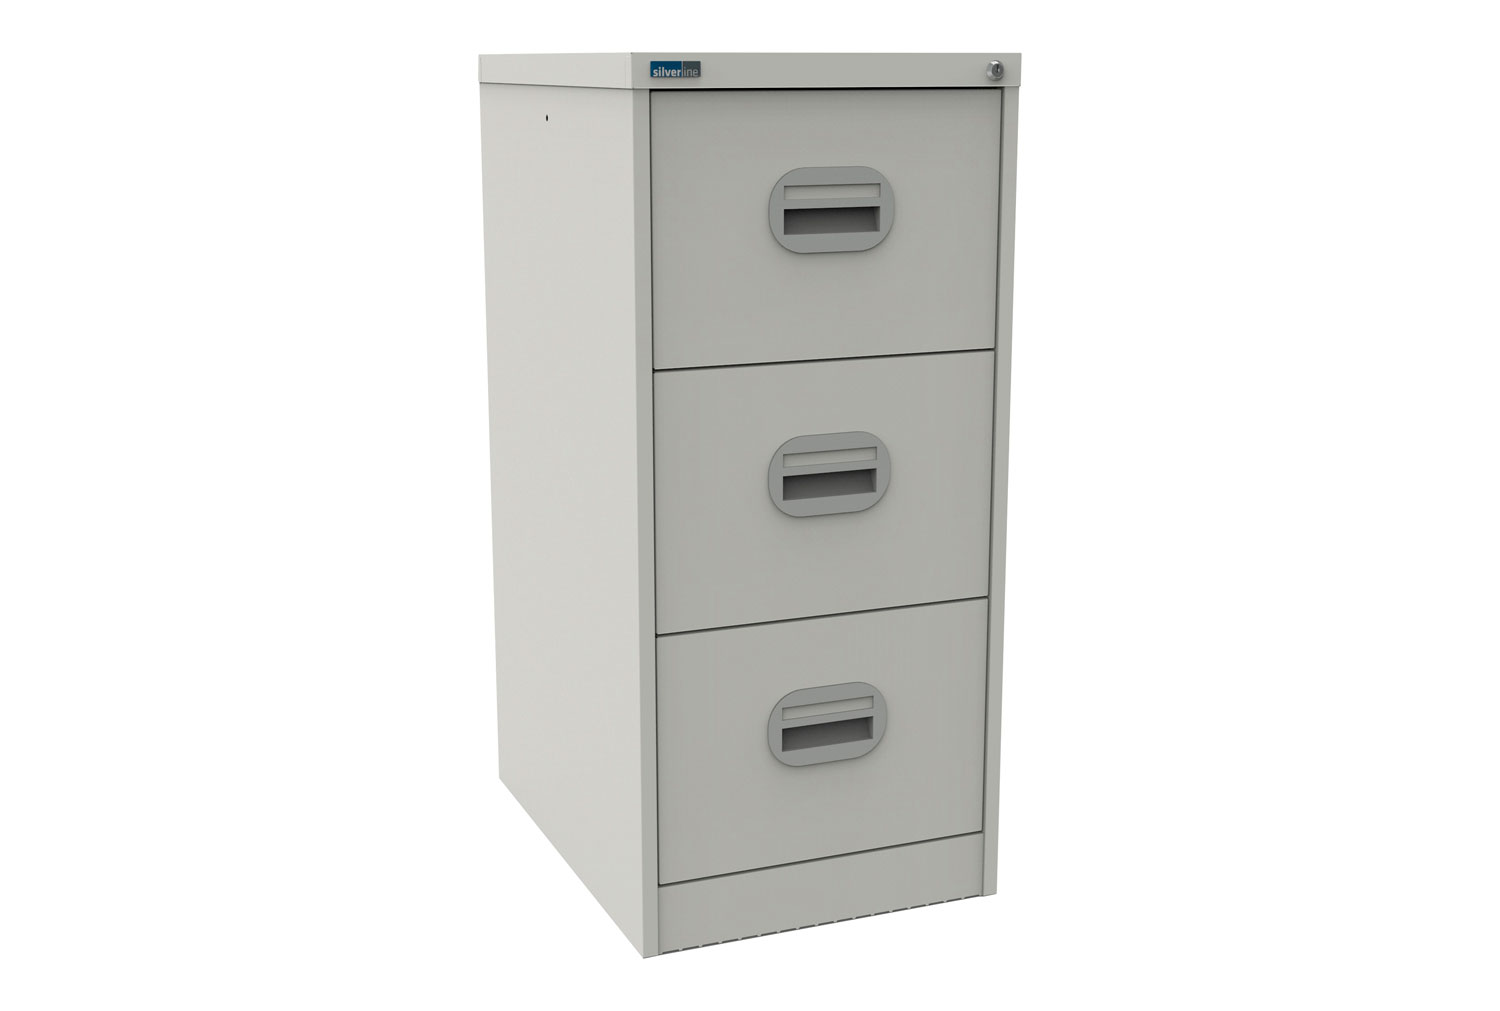 Silverline Kontrax 3 Drawer Filing Cabinet, 3 Drawer - 46wx62dx101h (cm), Traffic White